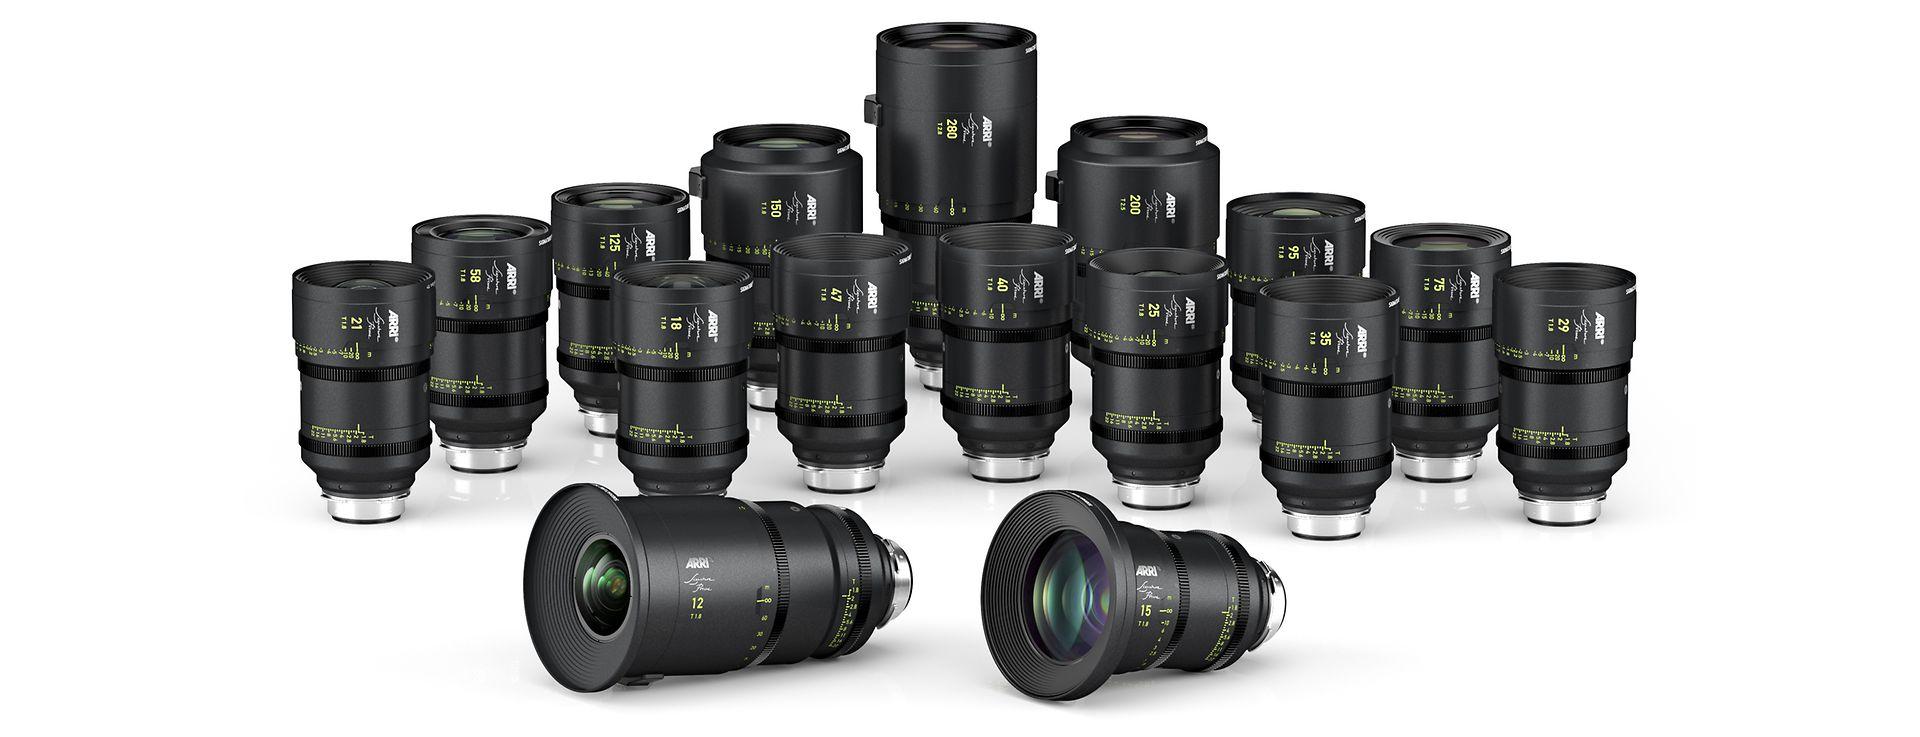 20200117-0101-arri-signature-primes-large-format-lenses-full-set.jpg